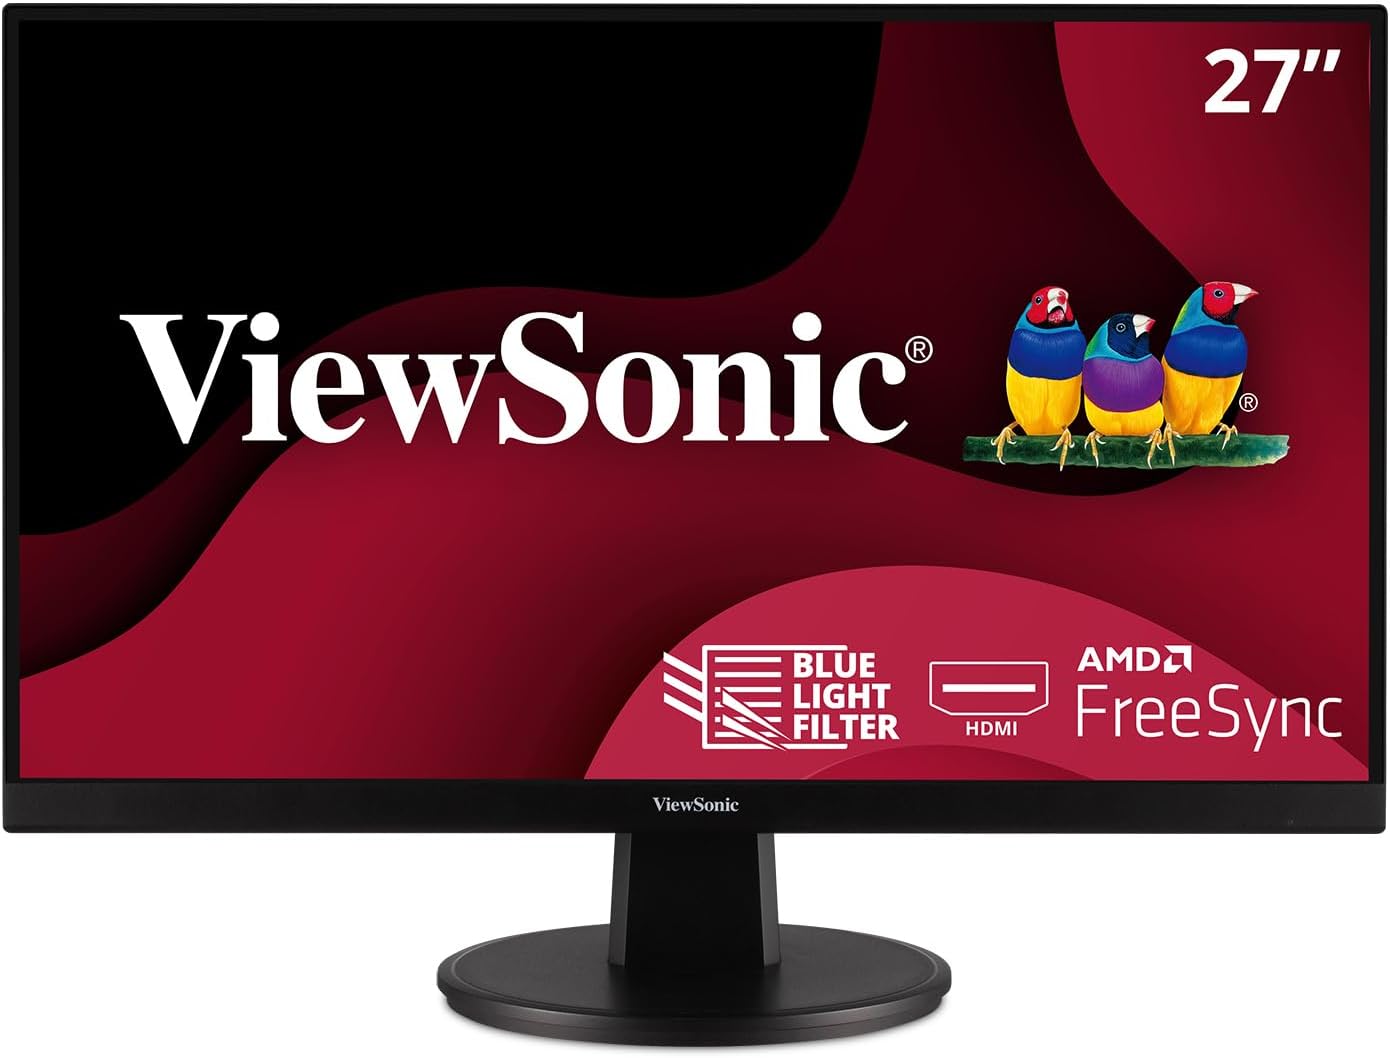 ViewSonic VA2747-MH 27 Inch Full HD Monitor Review